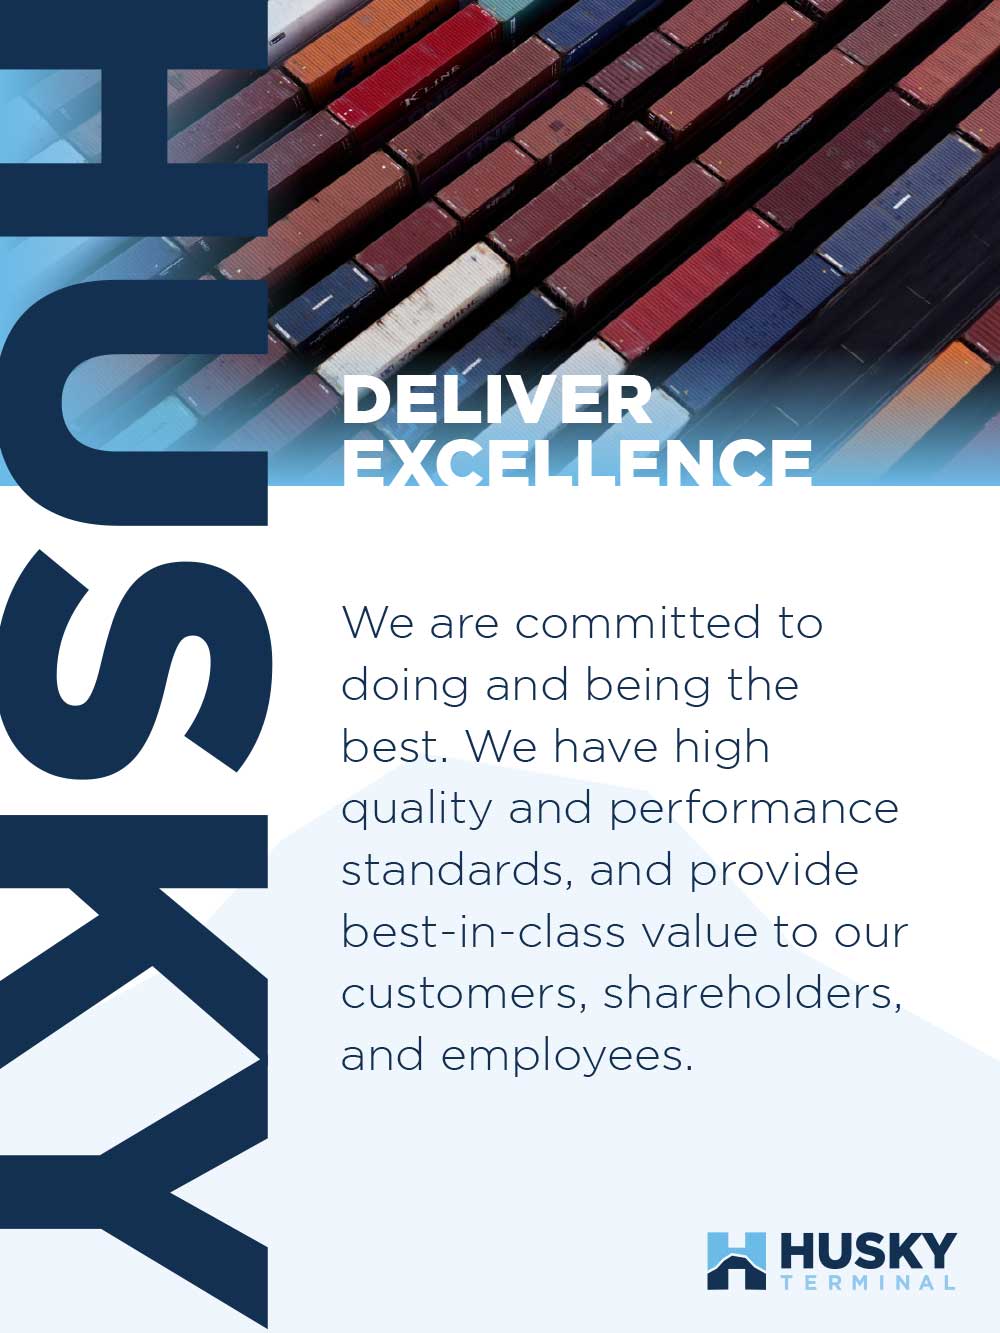 Value poster: Deliver Excellence